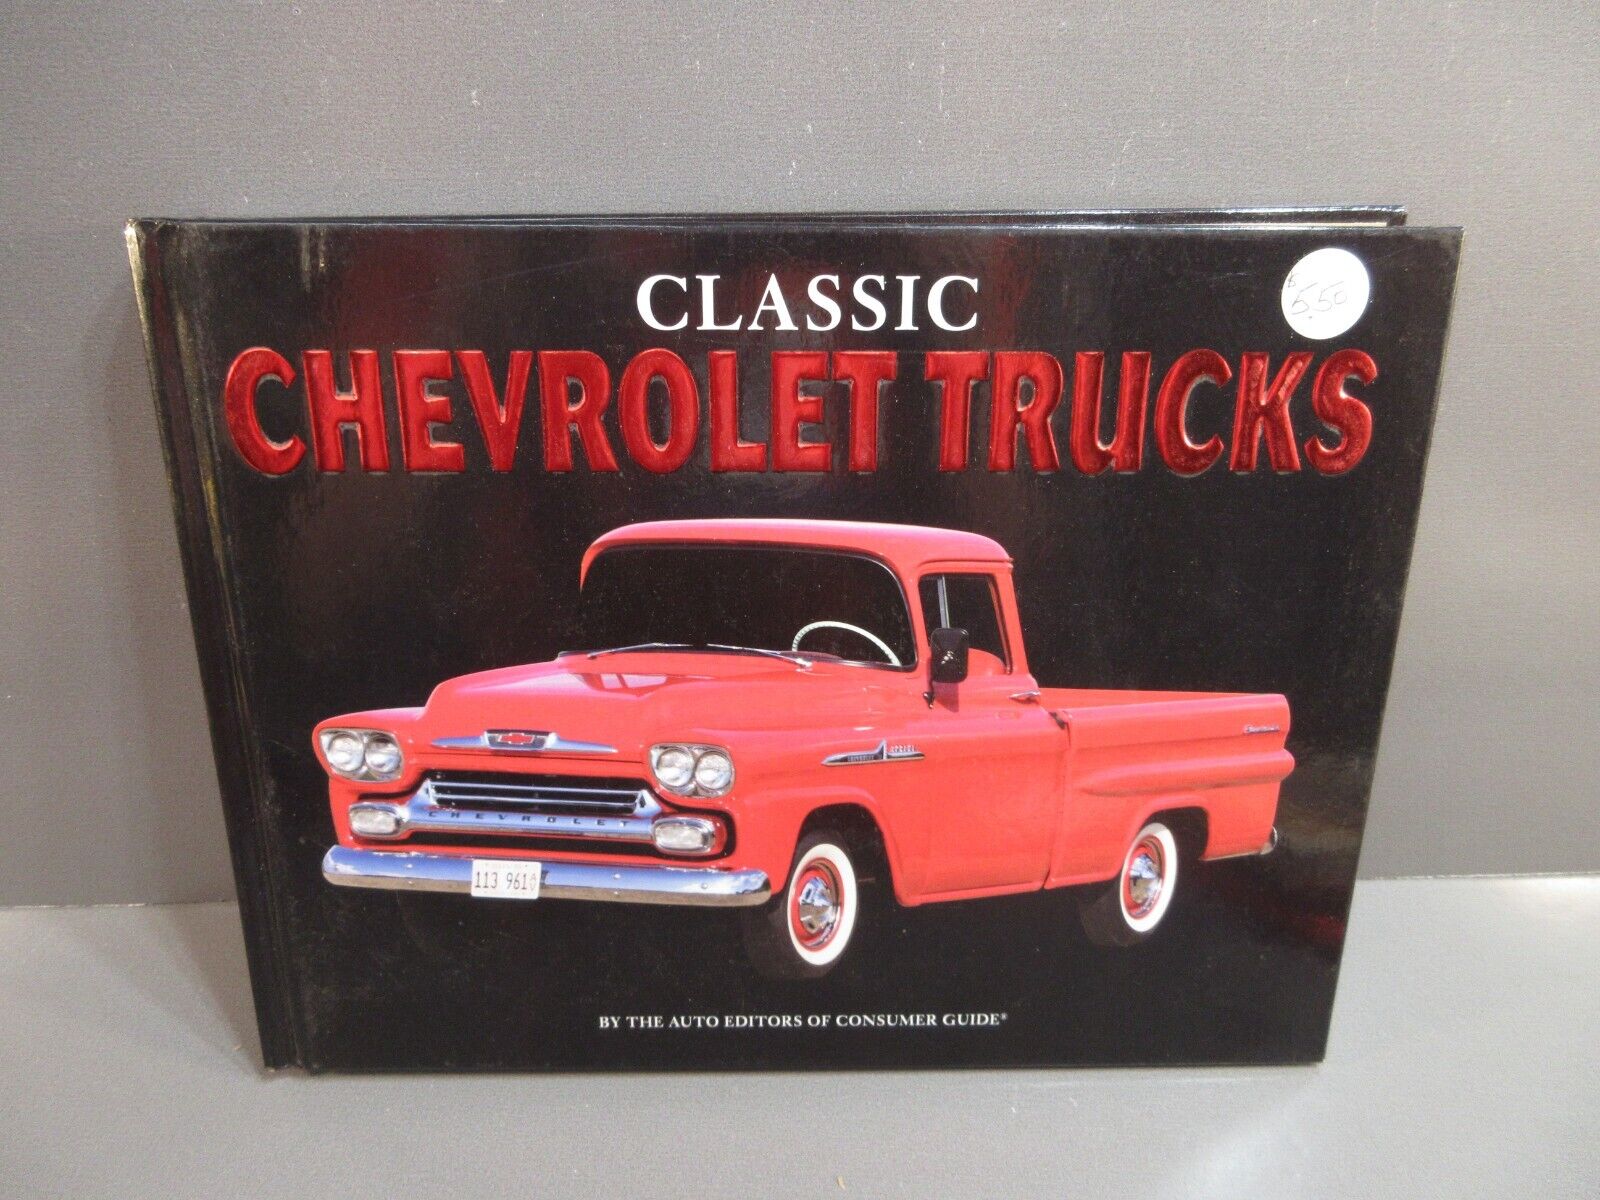 Classic Chevrolet Trucks